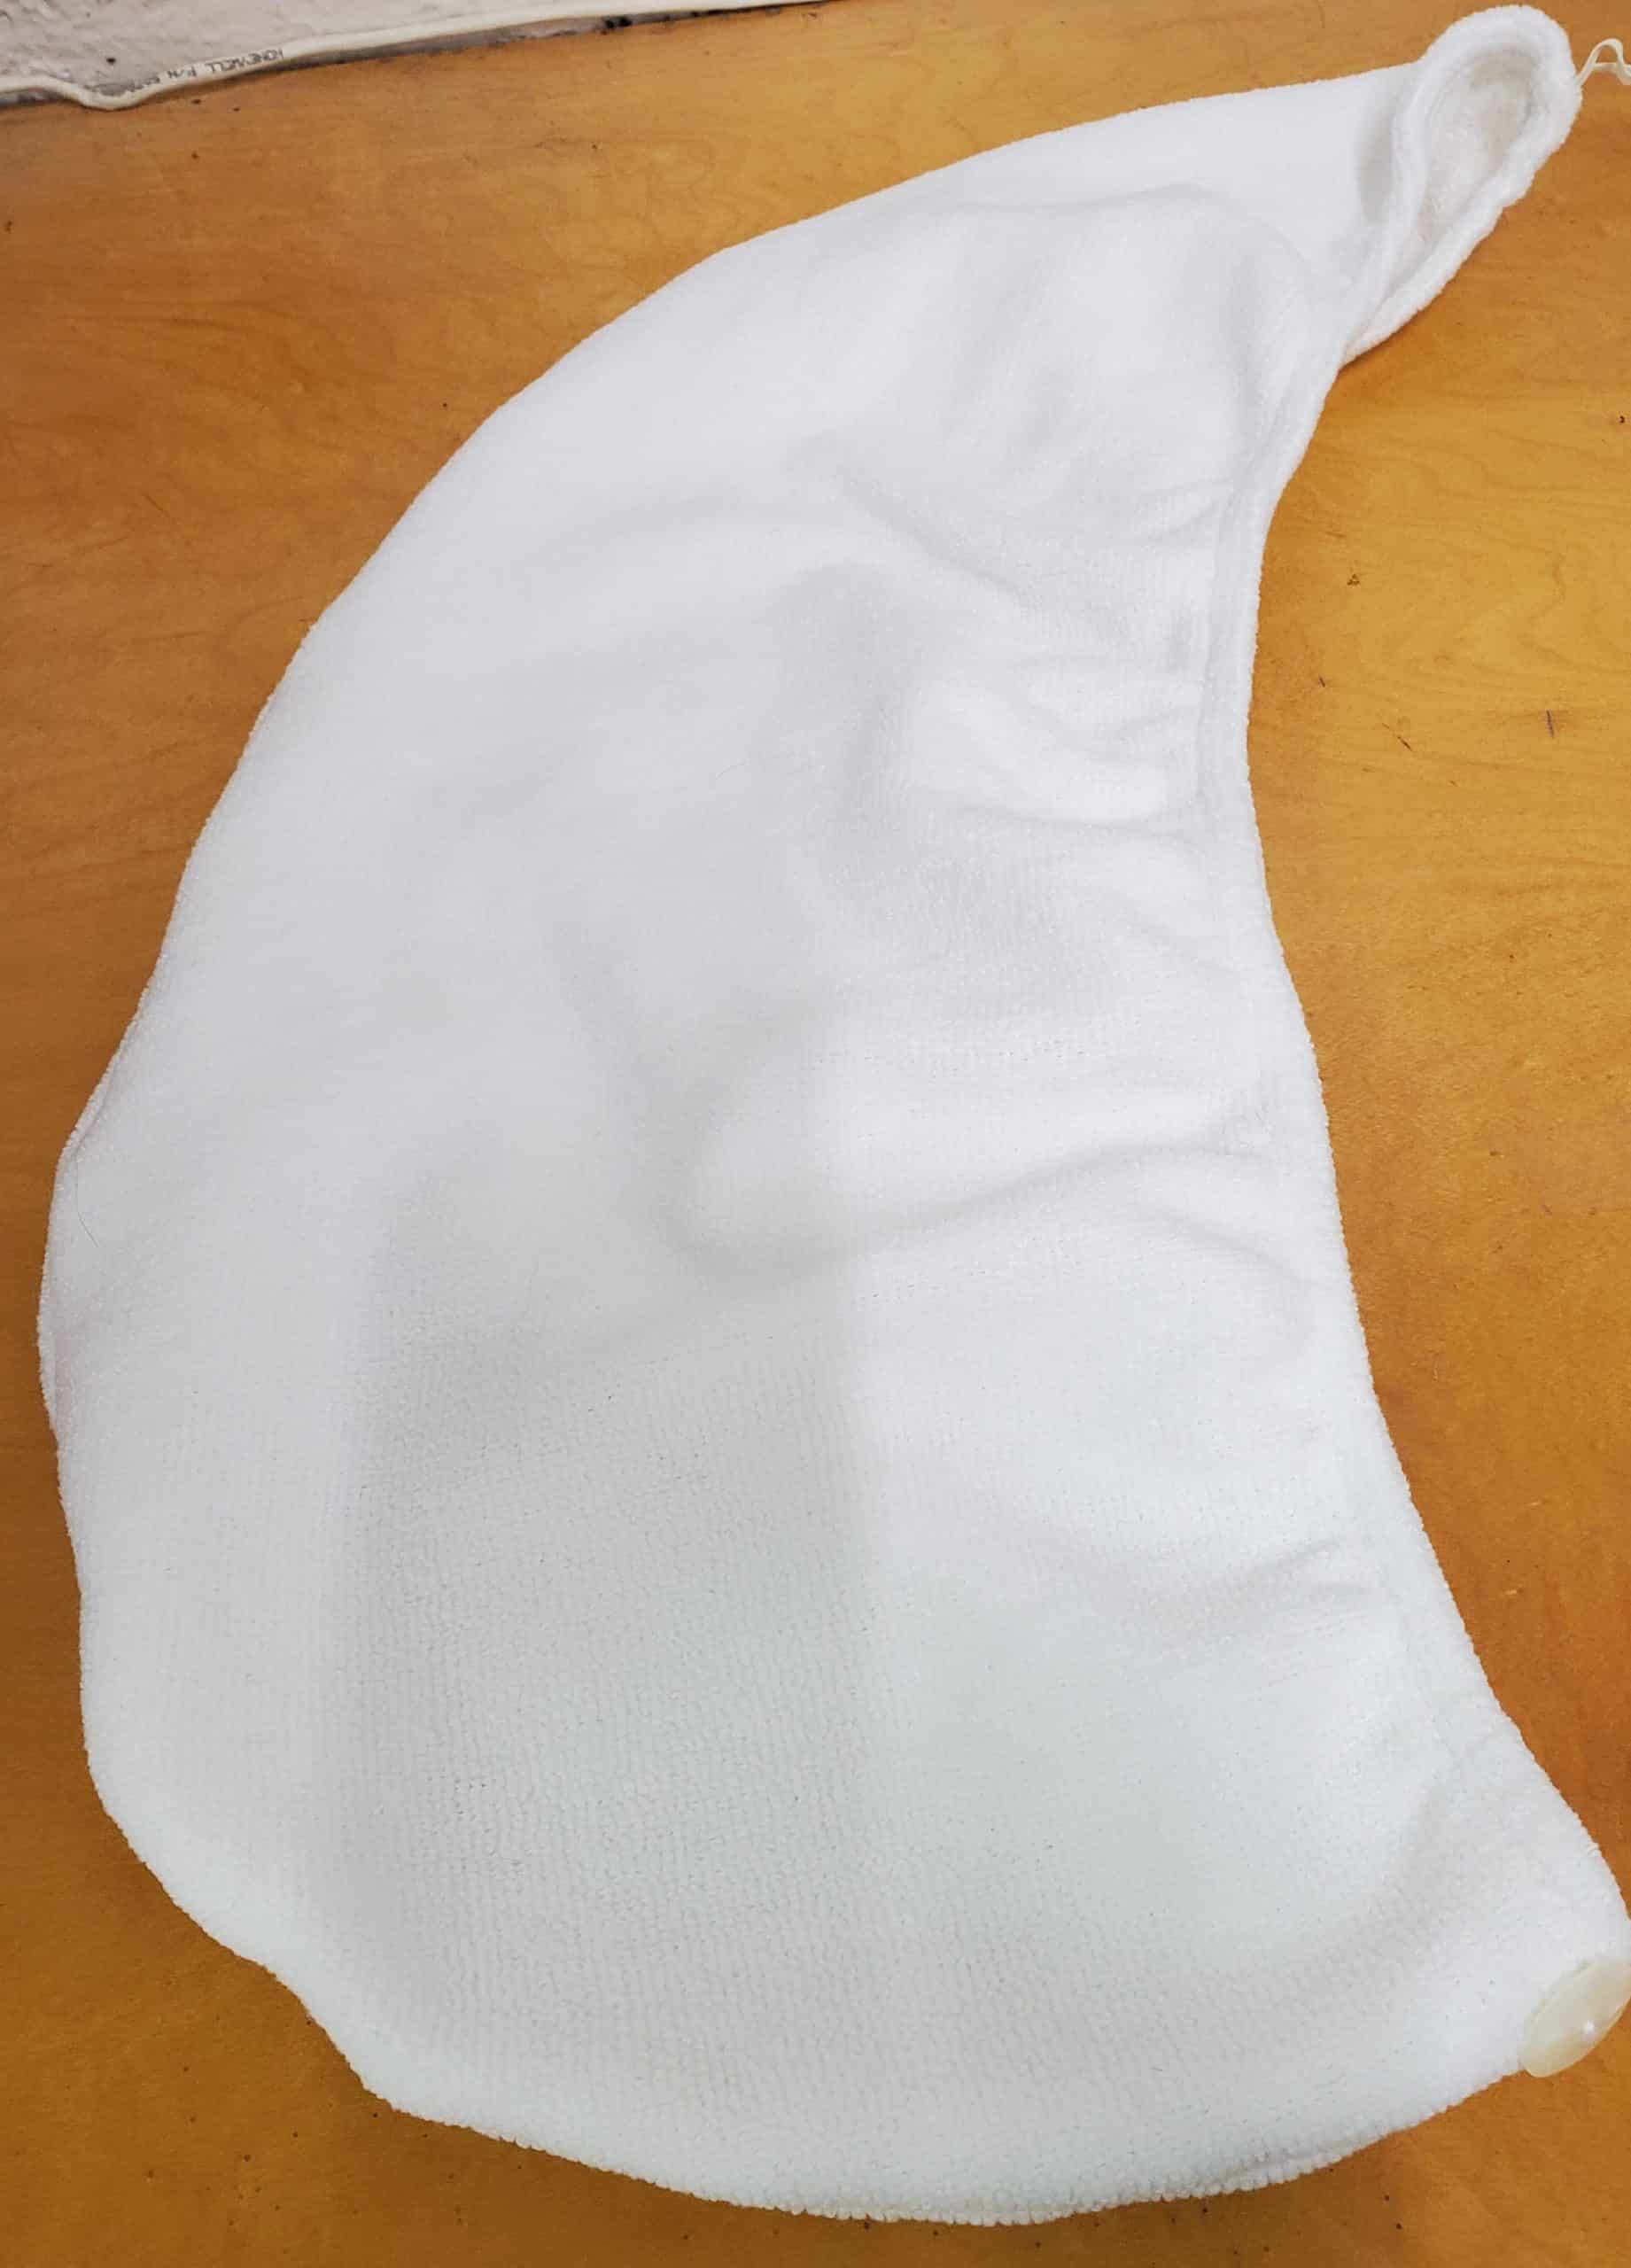 Turban towel in soft microfiber